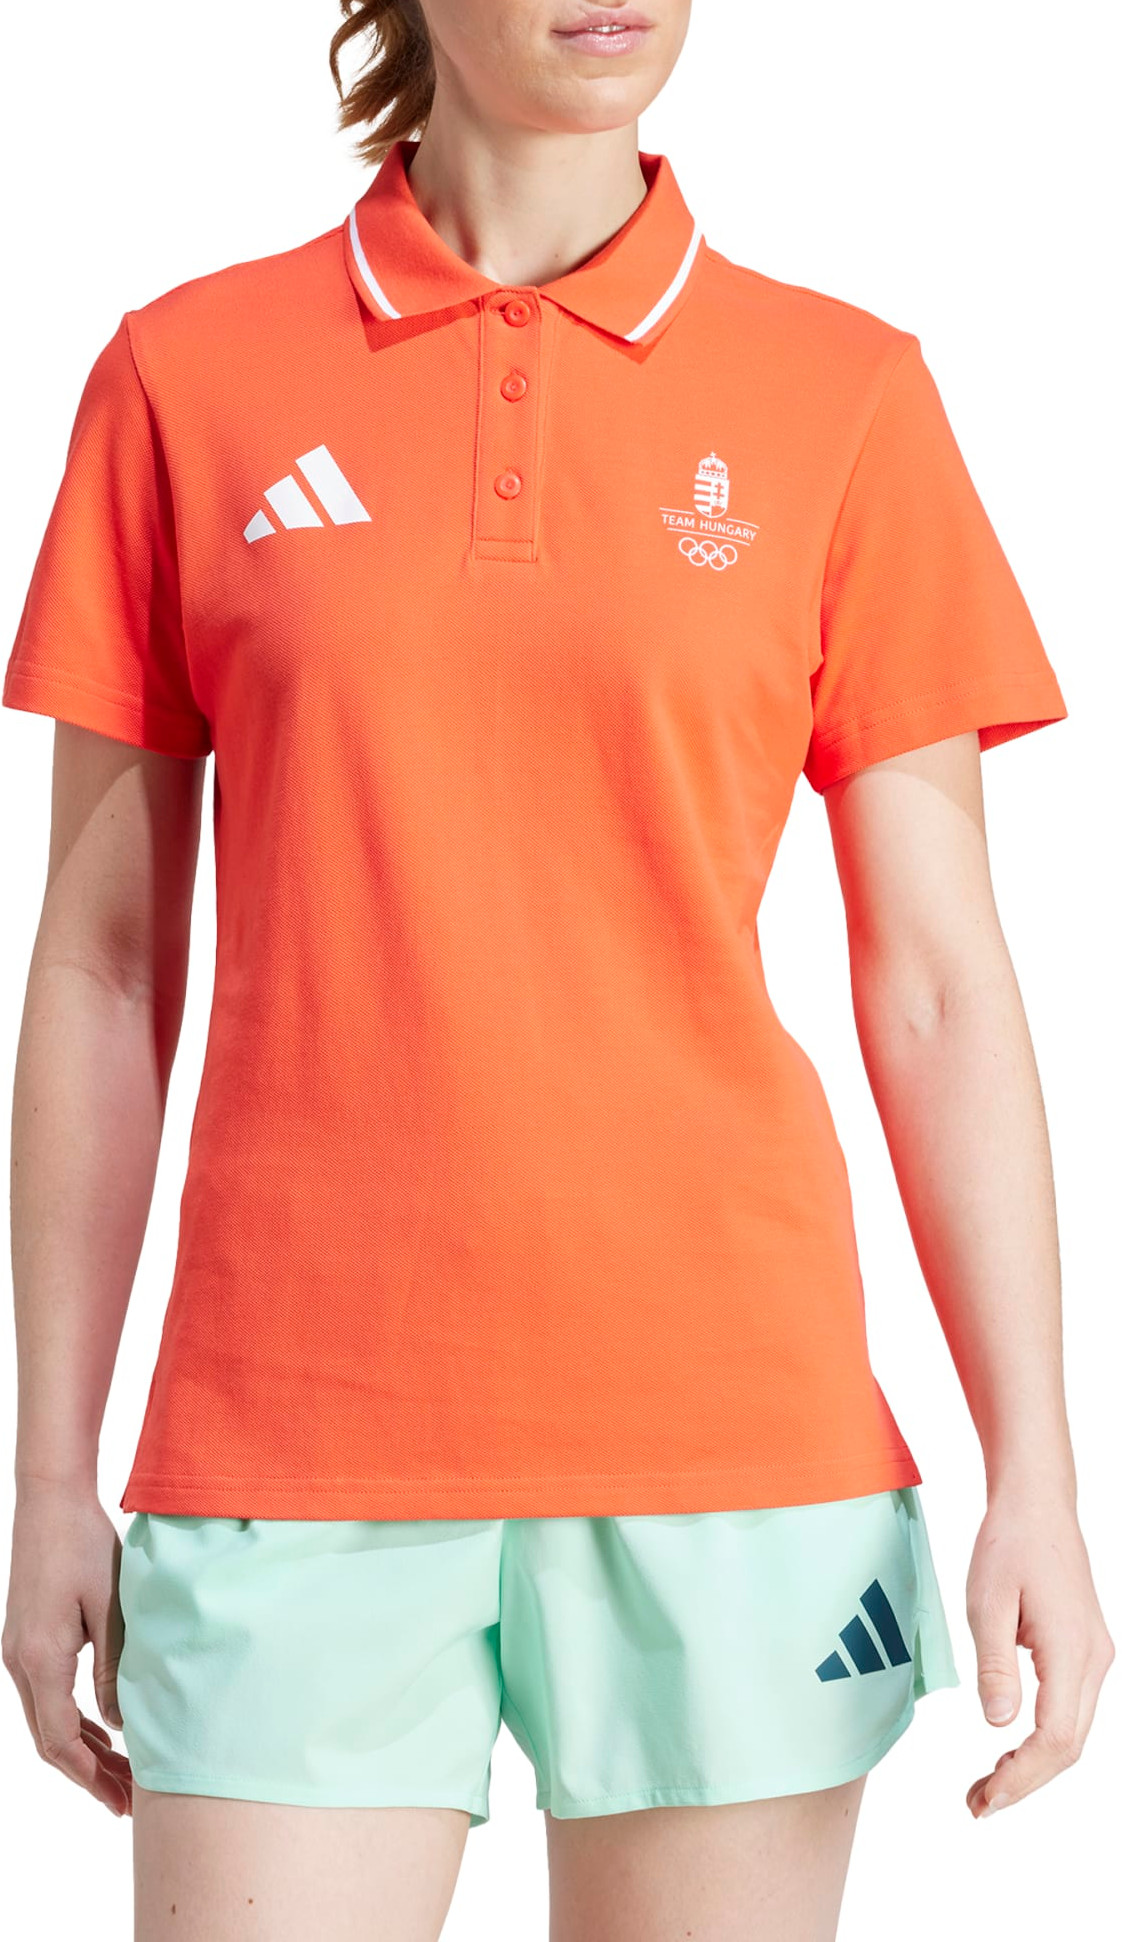 Dámská košile s krátkým rukávem adidas Team Hungary